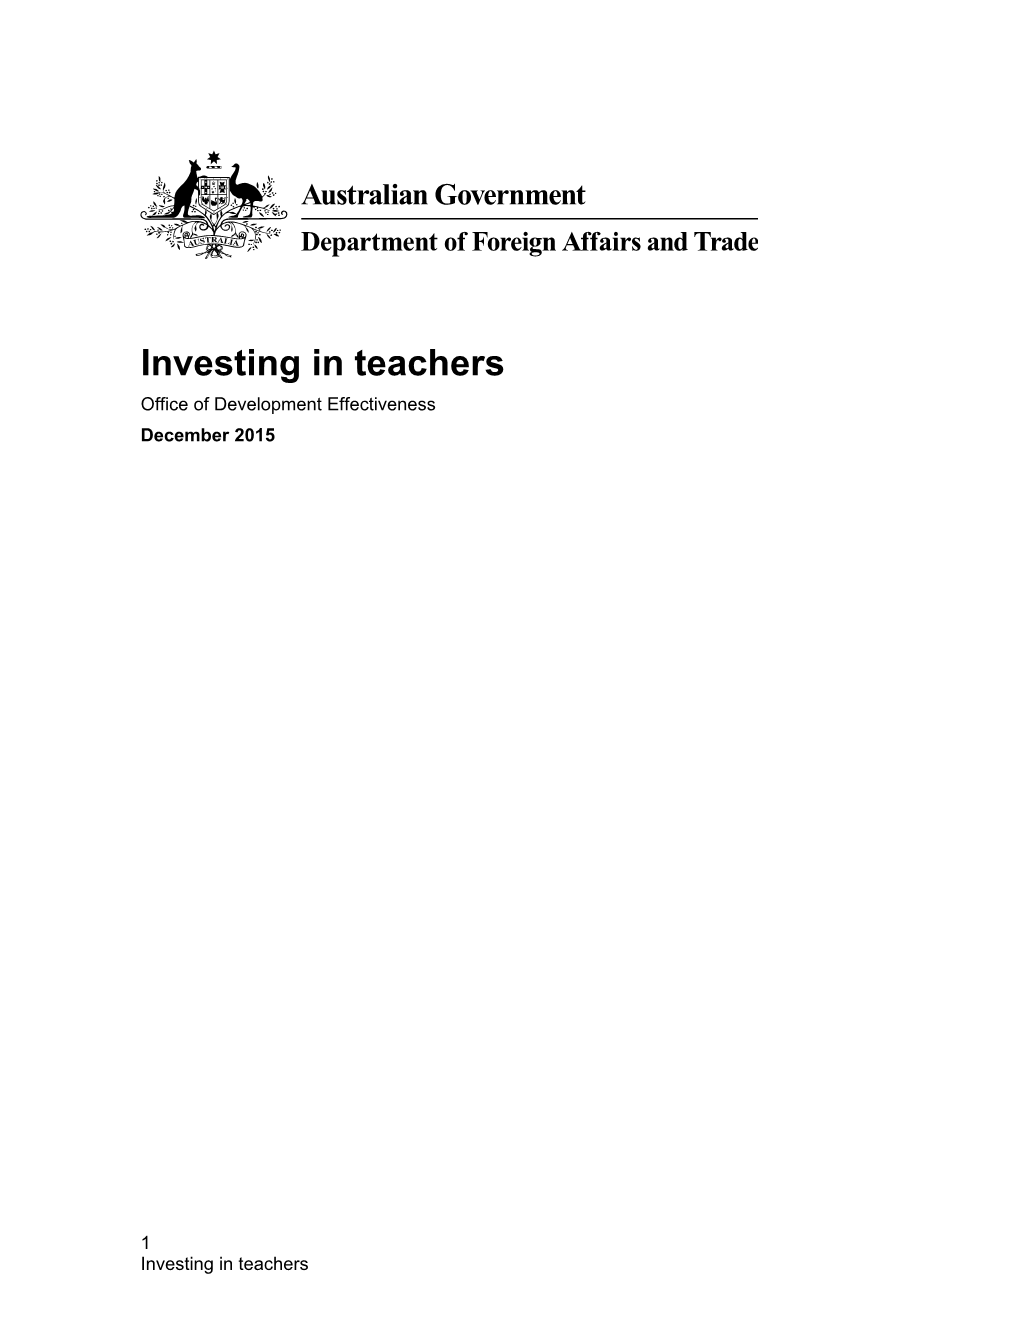 Investing in Teachers